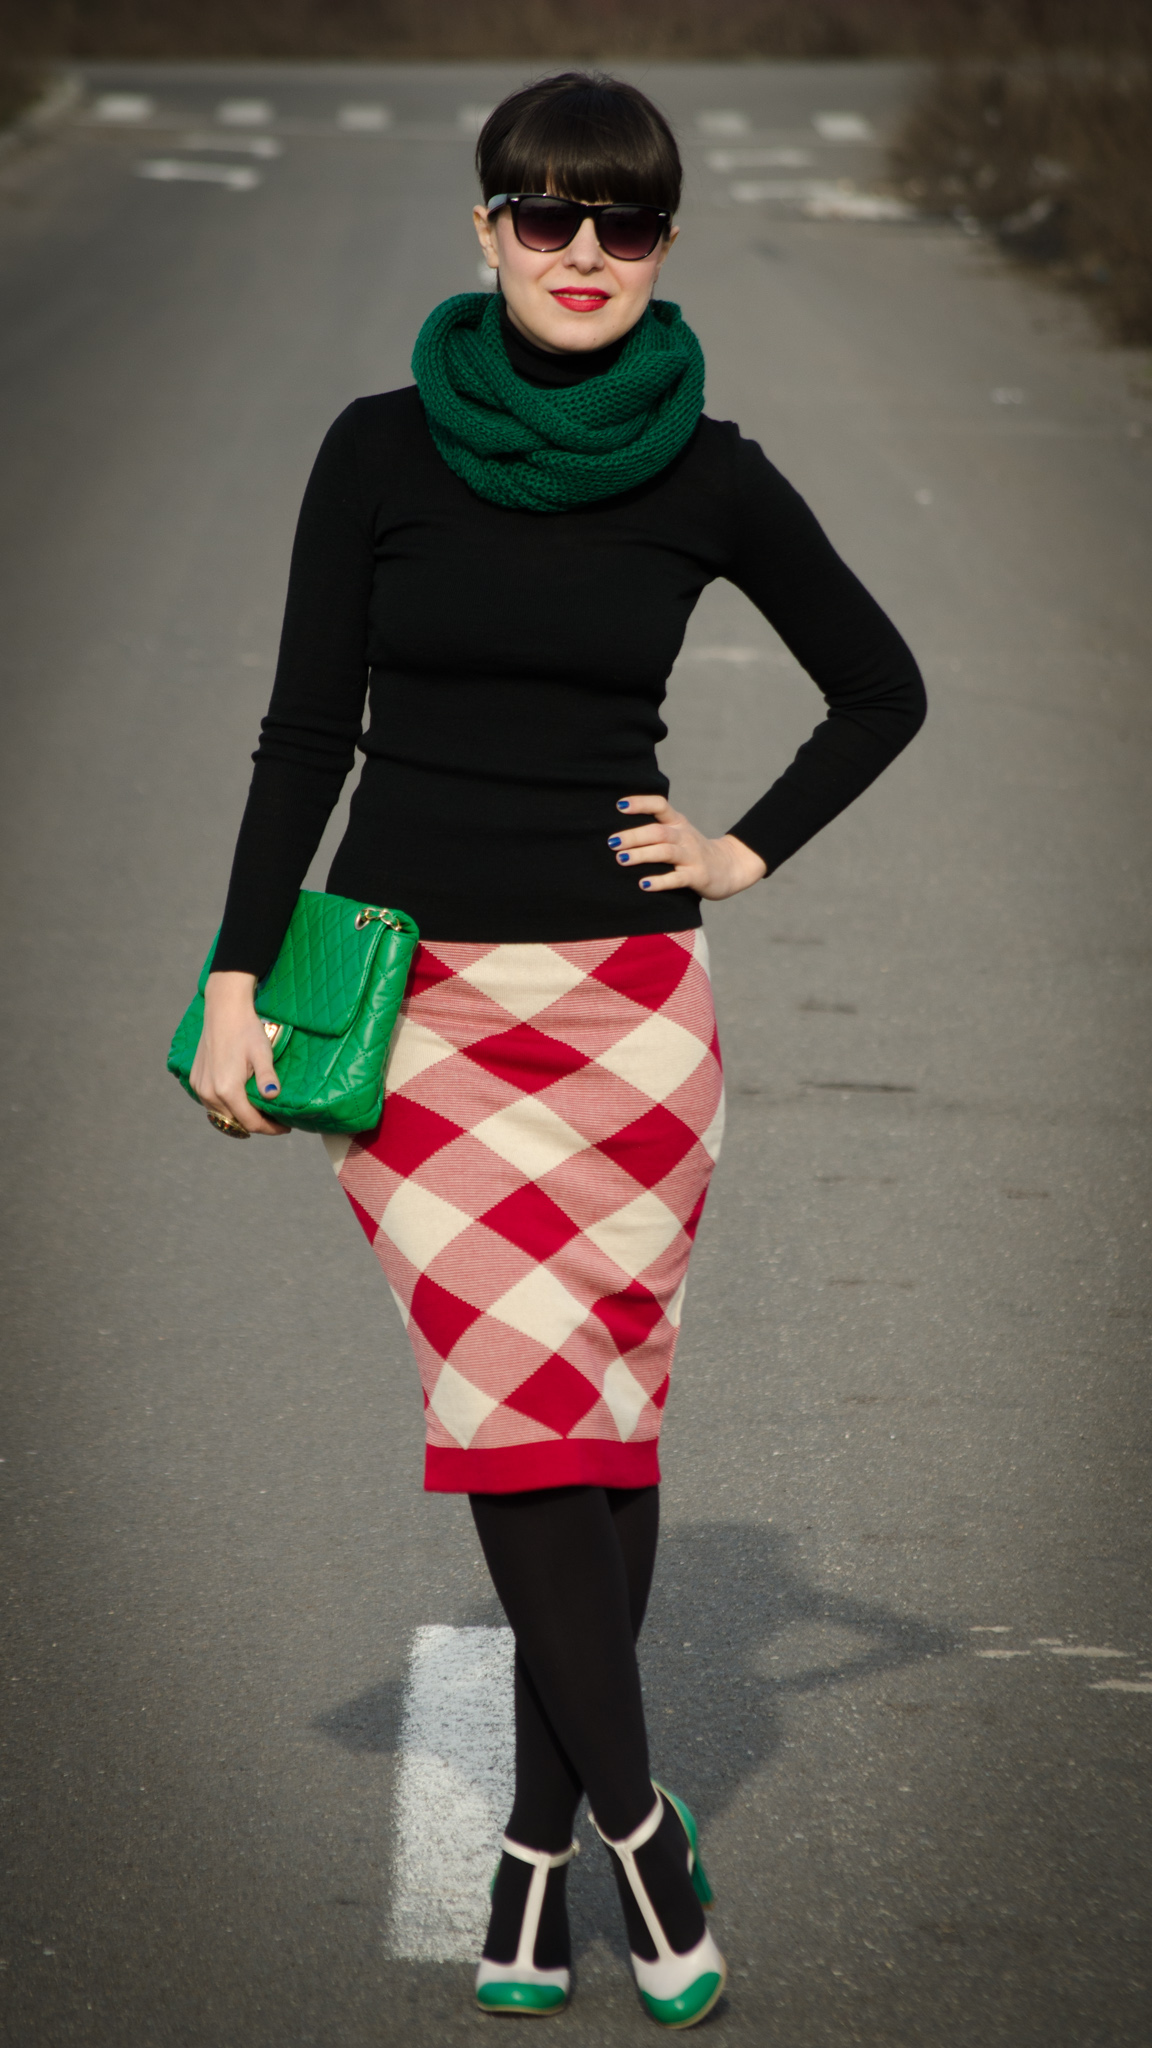 red checkered pencil skirt checkers black turtleneck green scarf bag handbag nude & green high heels tina R koton Christmas look outfit